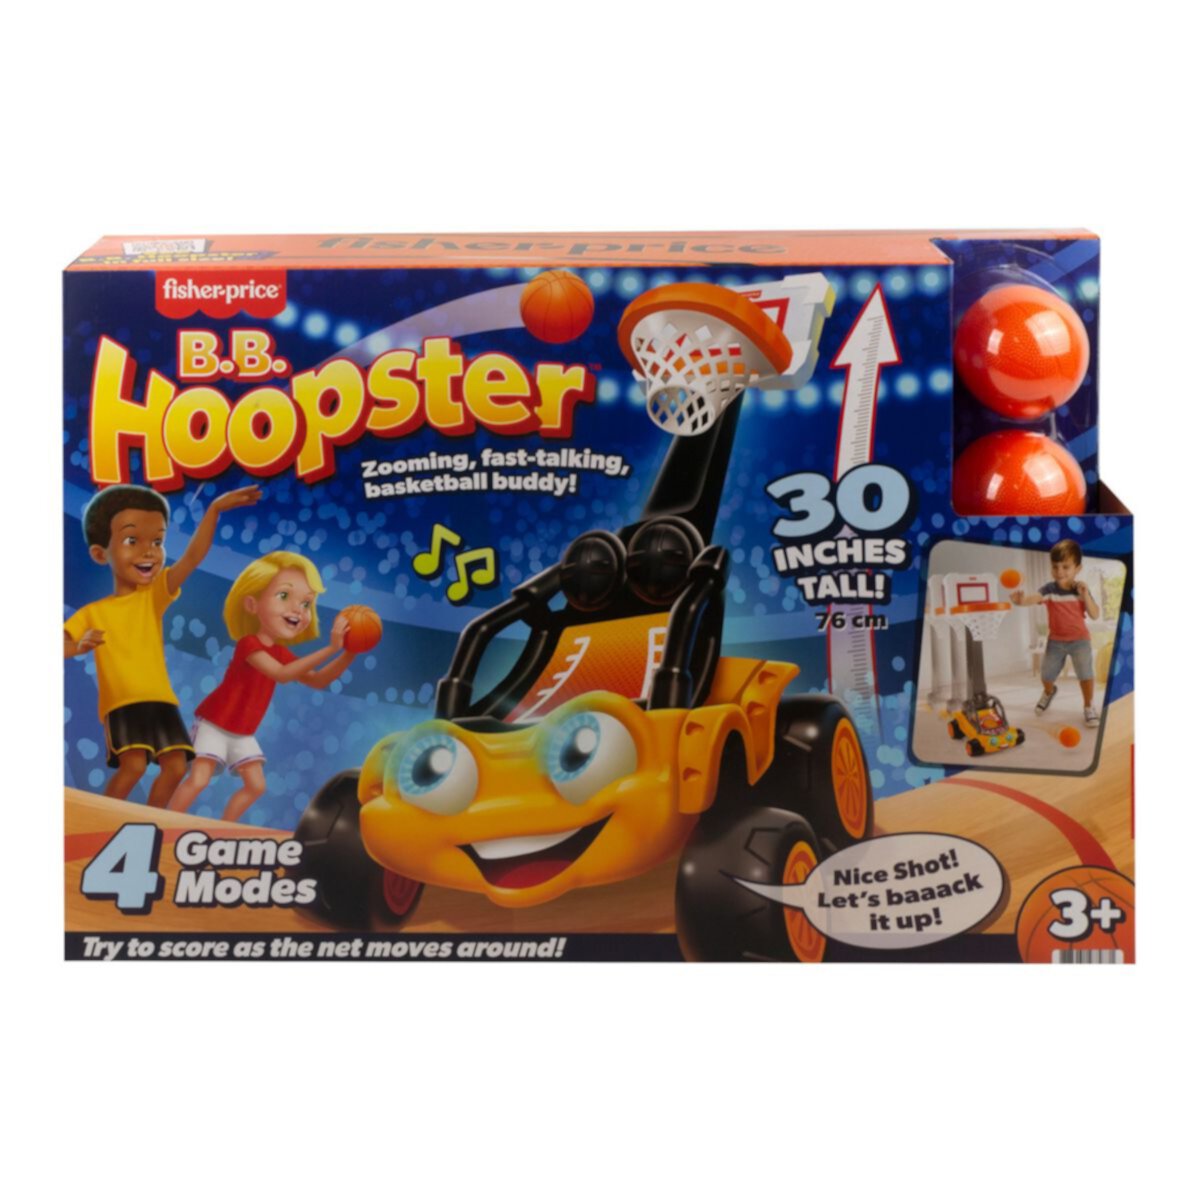 Детская баскетбольная игрушка Fisher-Price B.B. Hoopster Fisher-Price